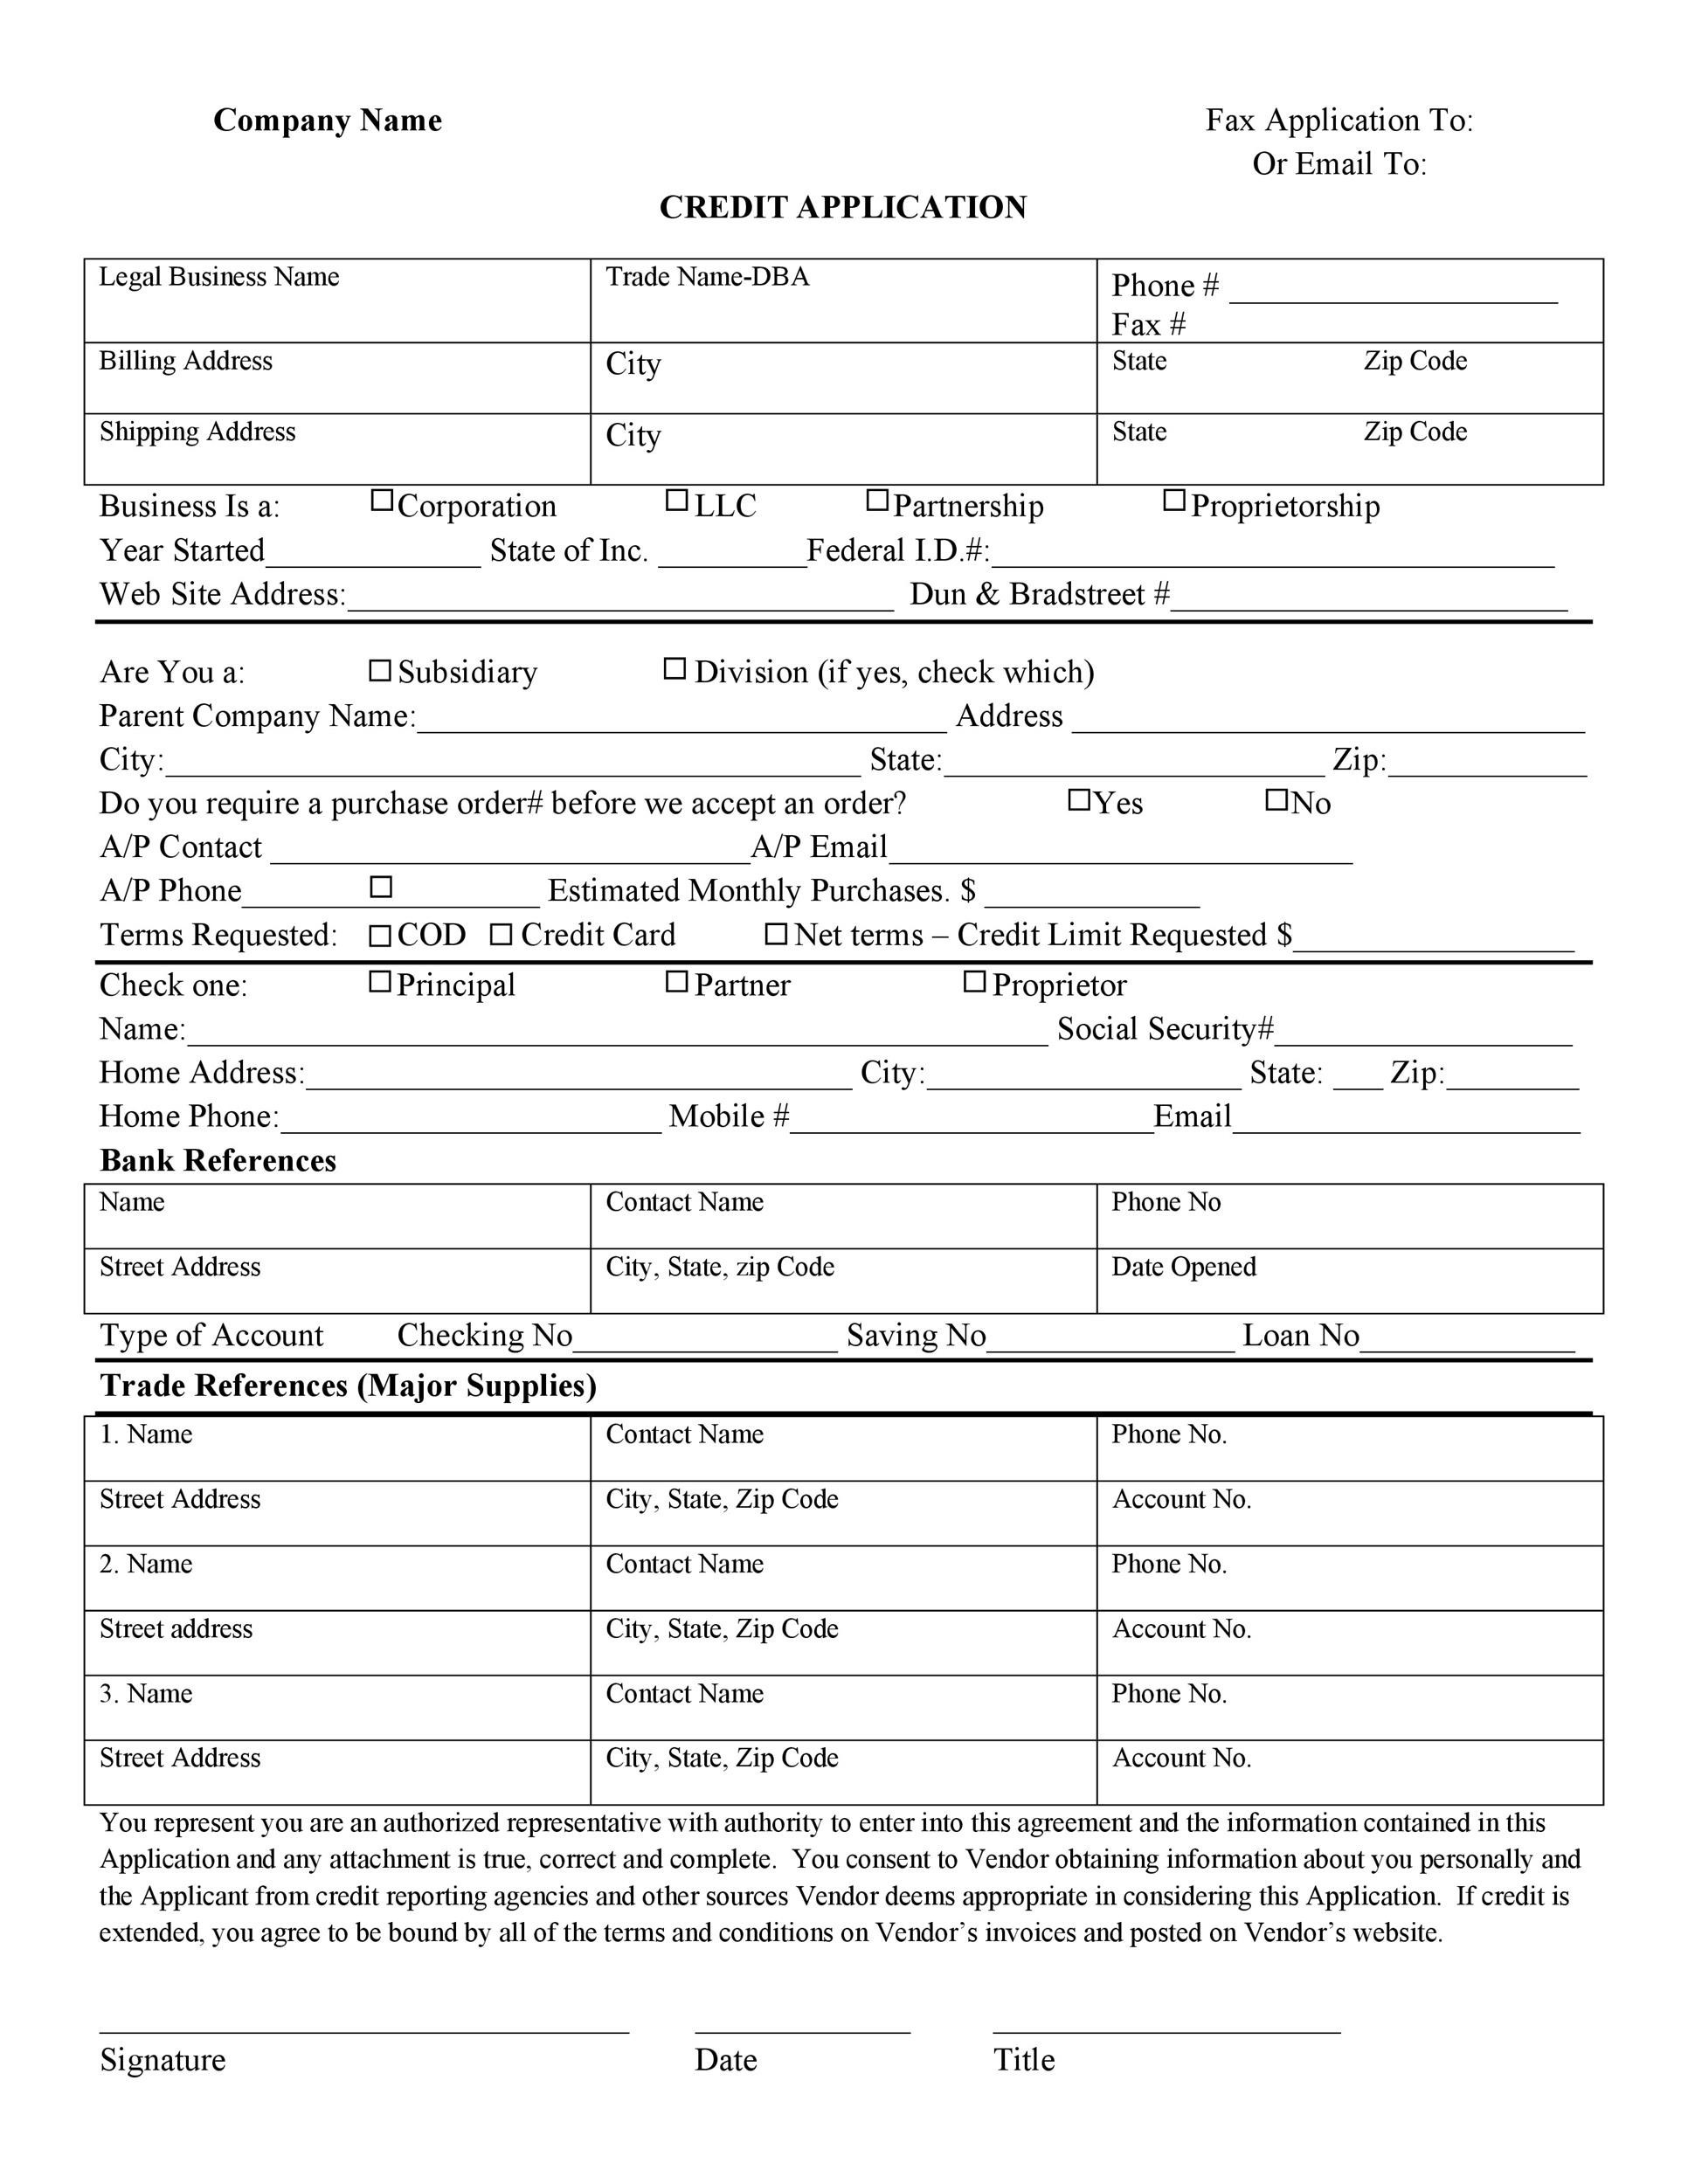 Free Credit Application Form 06